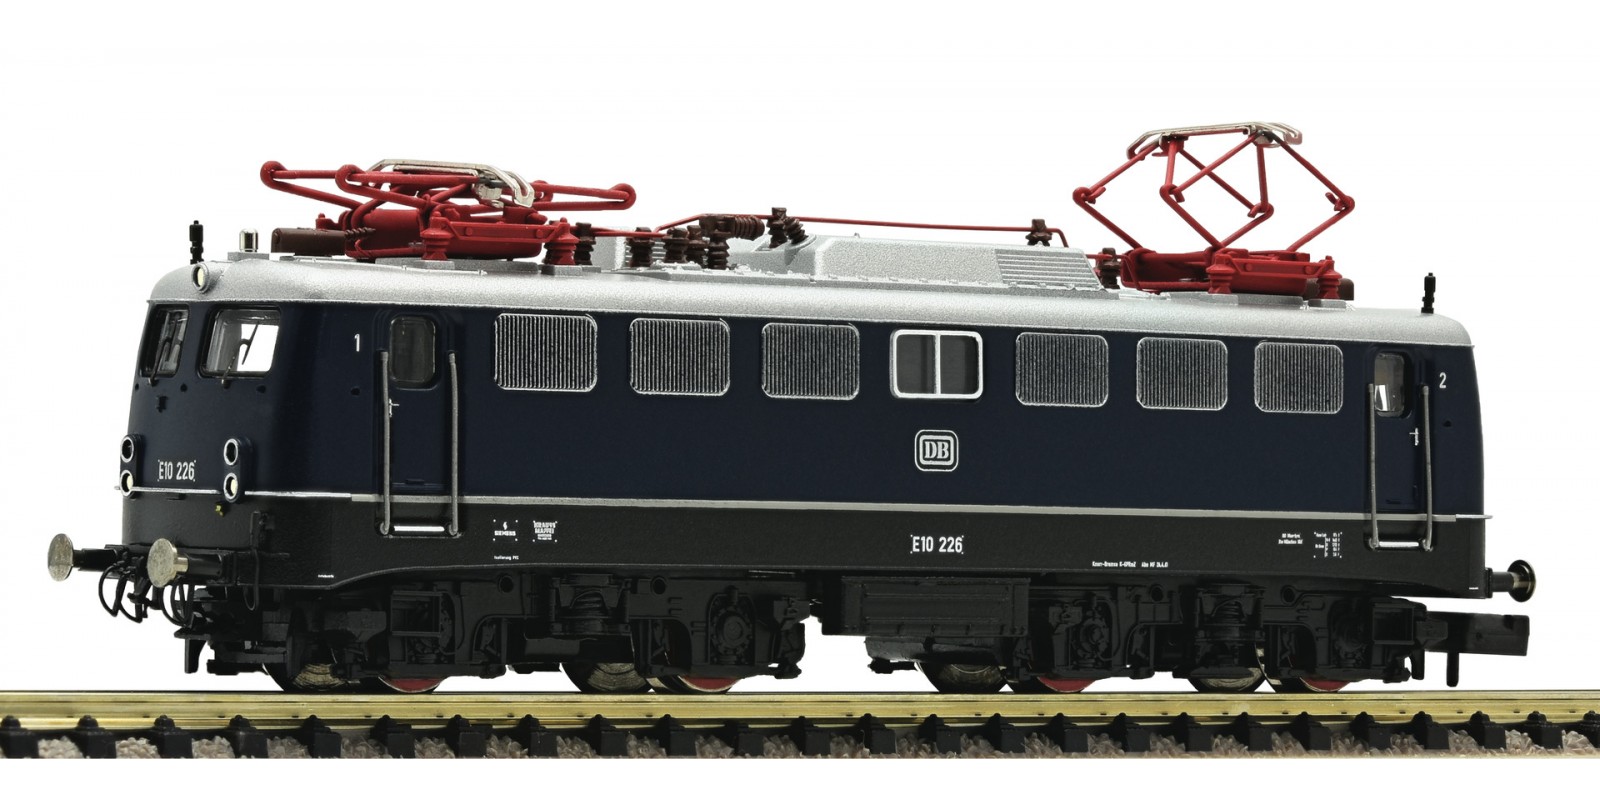 FL733601 - Electric locomotive E 10 226 (class E 10.2), DB